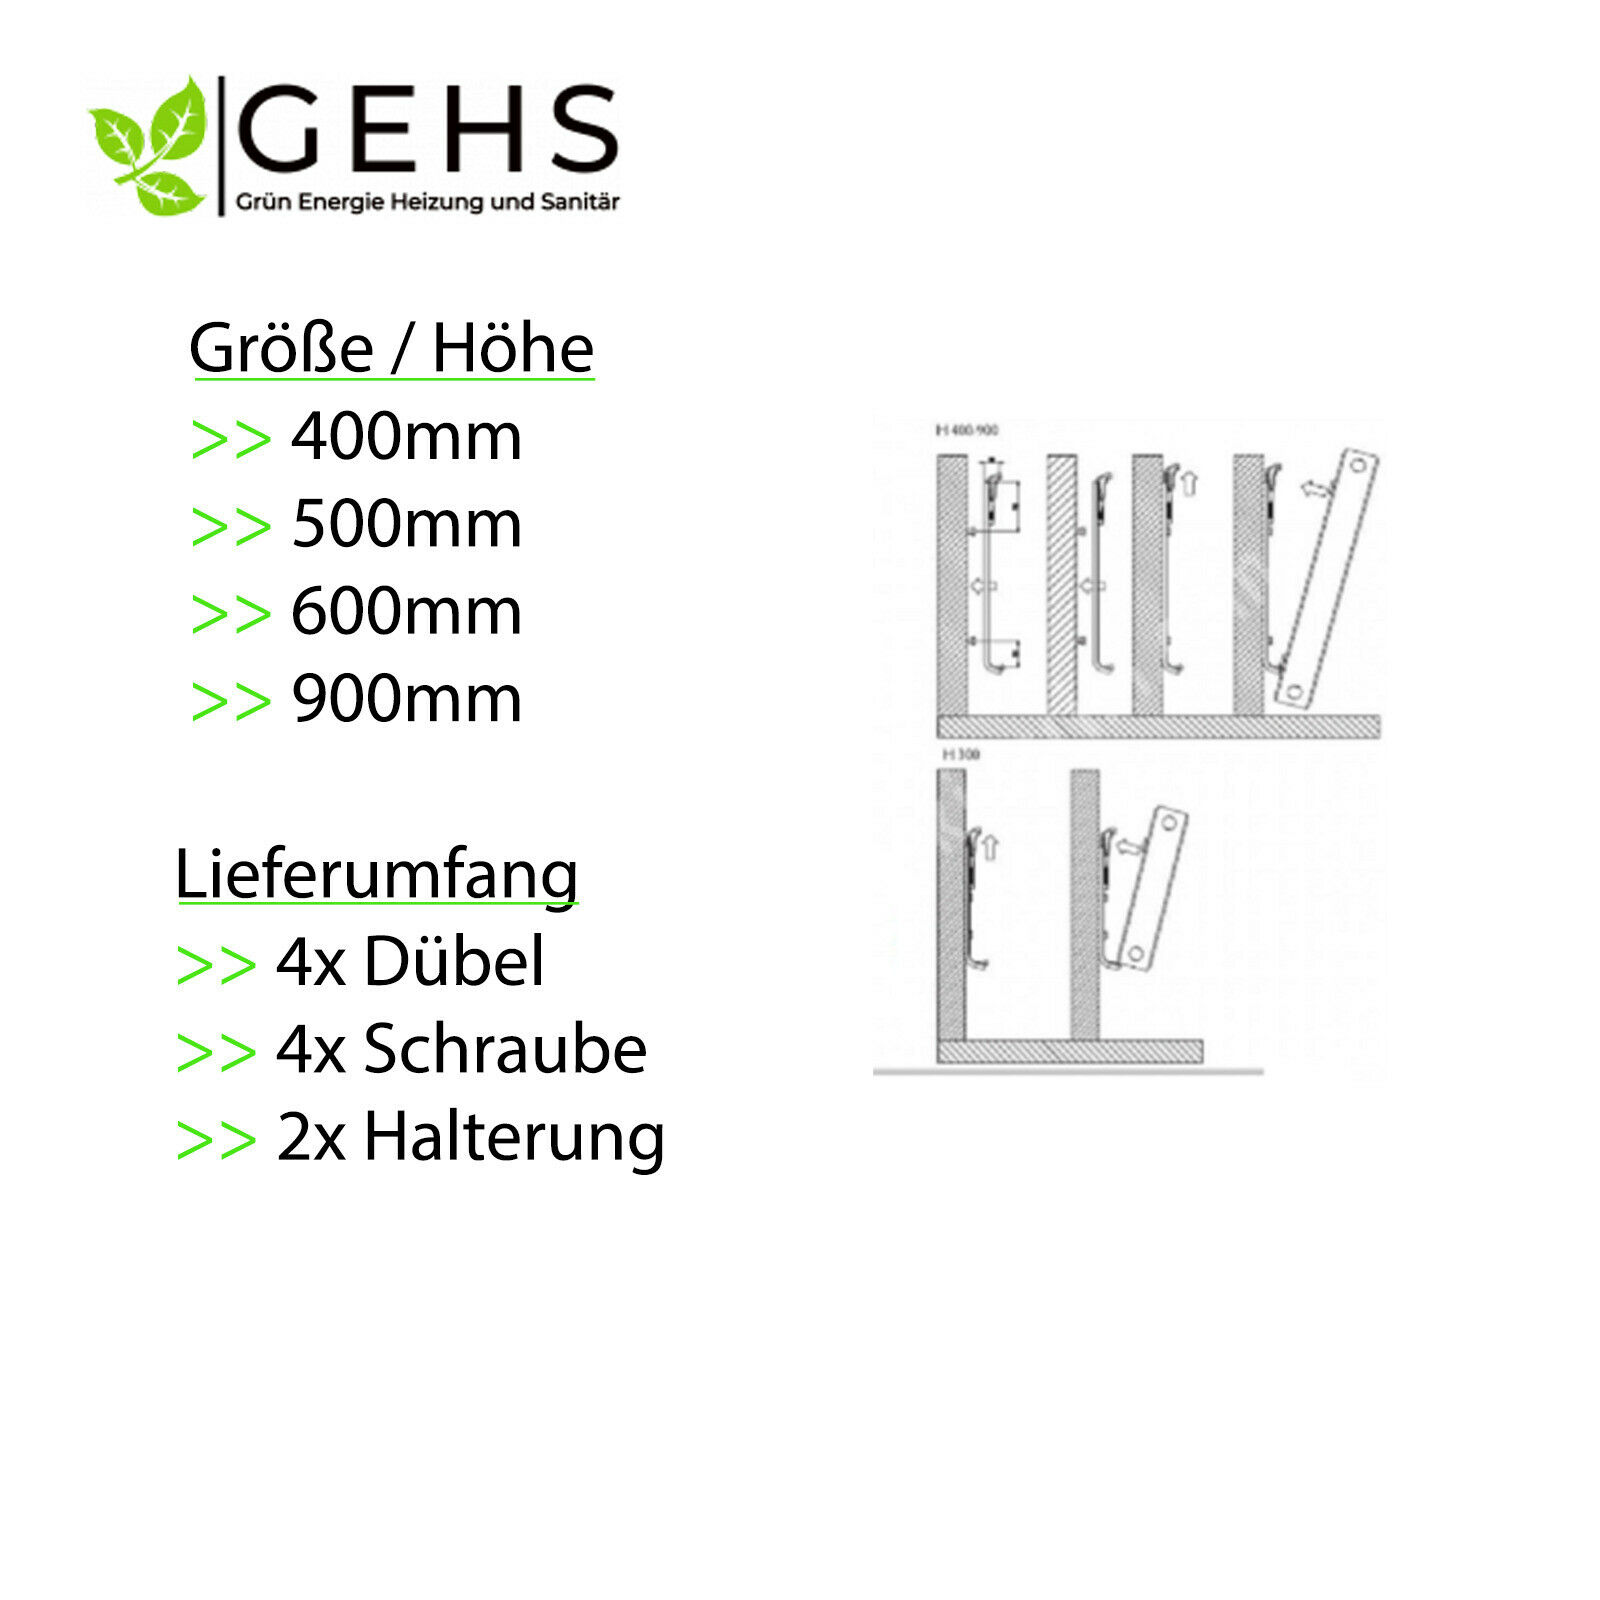 Heizkörper Halterung Wandkonsolen BH 500 600 900 mm set (2Stk) - GEHS -  Grun Energie Heizung - Sanitär GmbH %